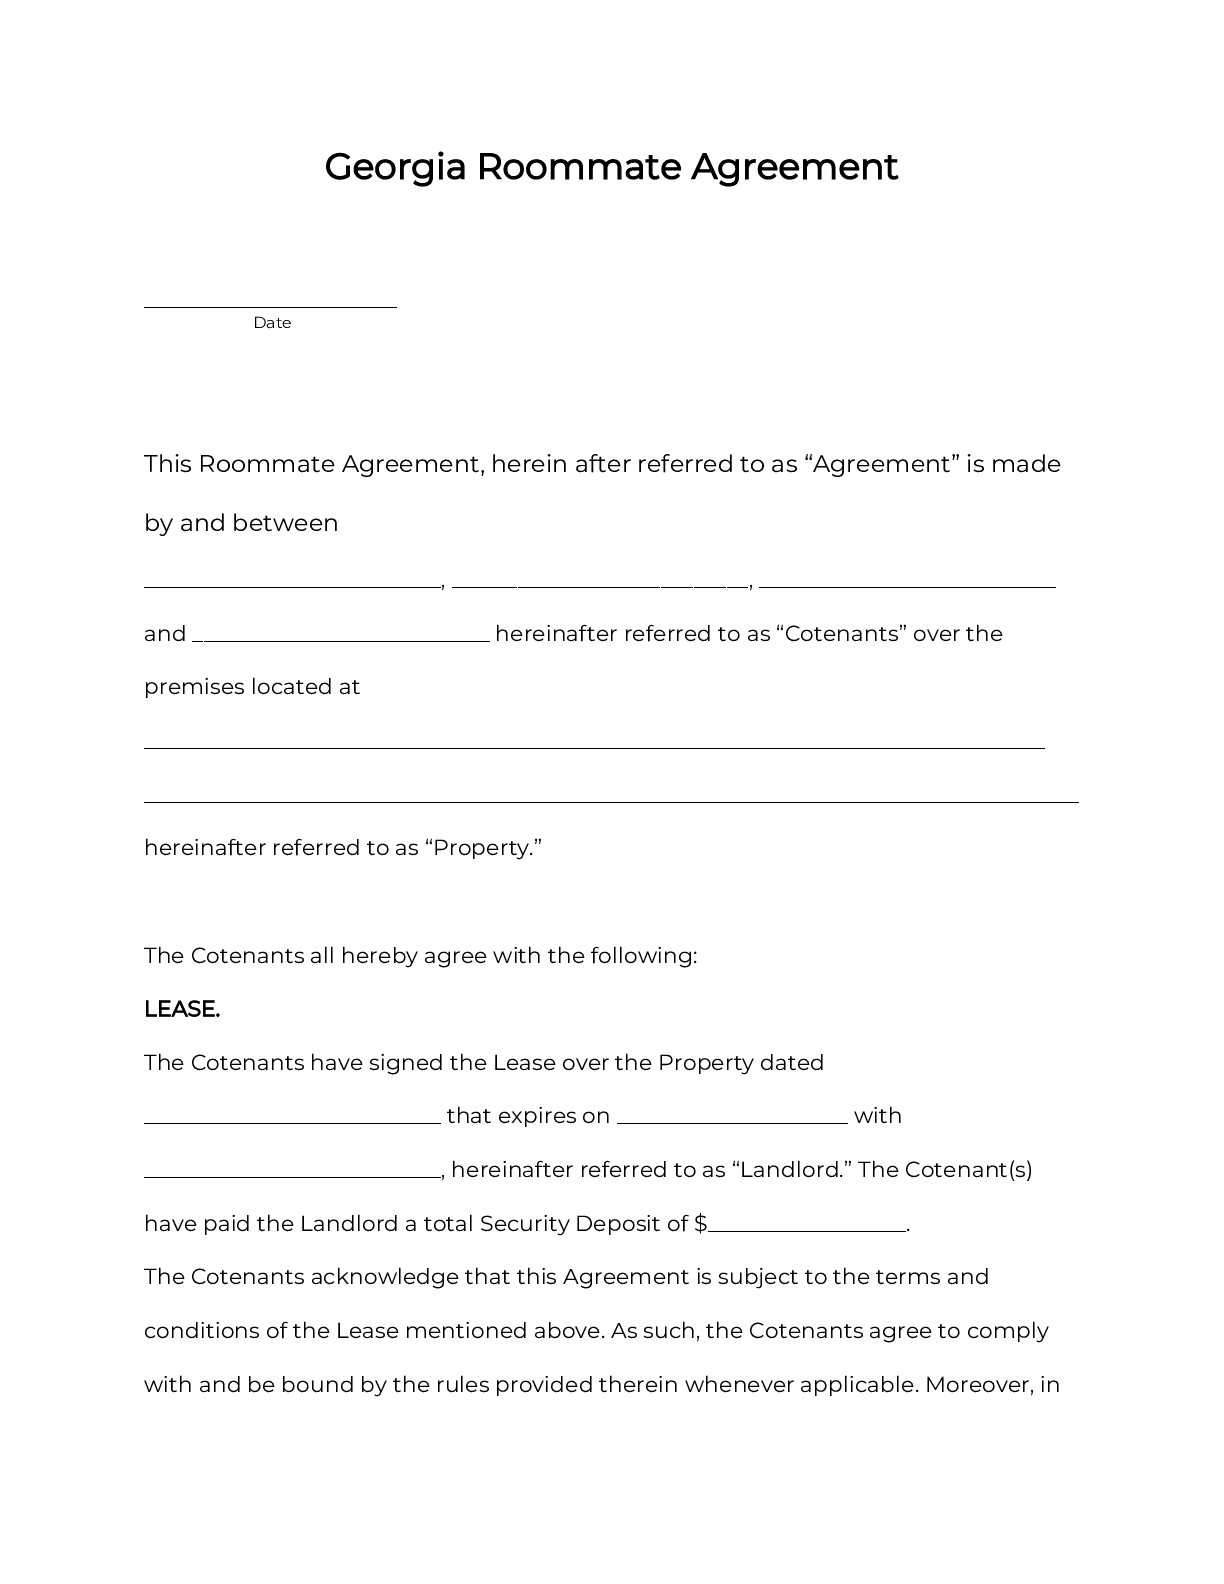 georgia-rental-lease-agreement-template-2023-pdf-doc